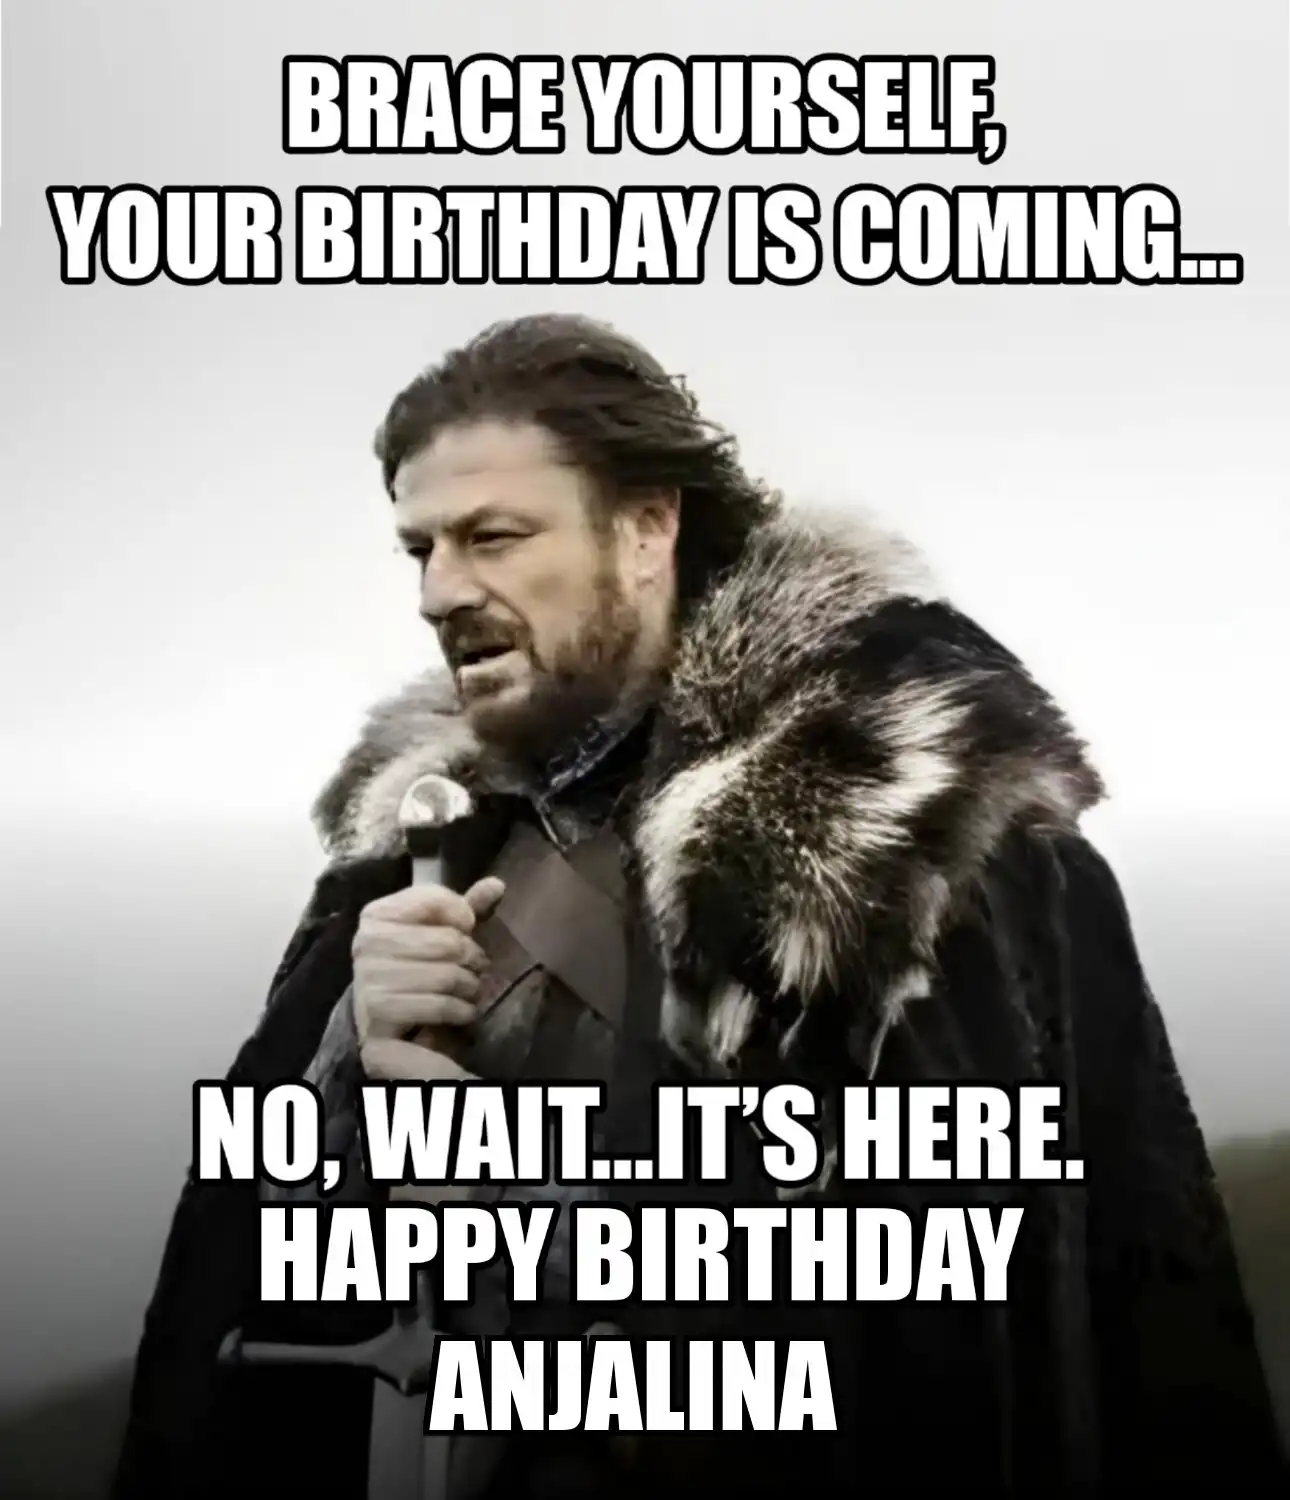 Happy Birthday Anjalina Brace Yourself Your Birthday Is Coming Meme